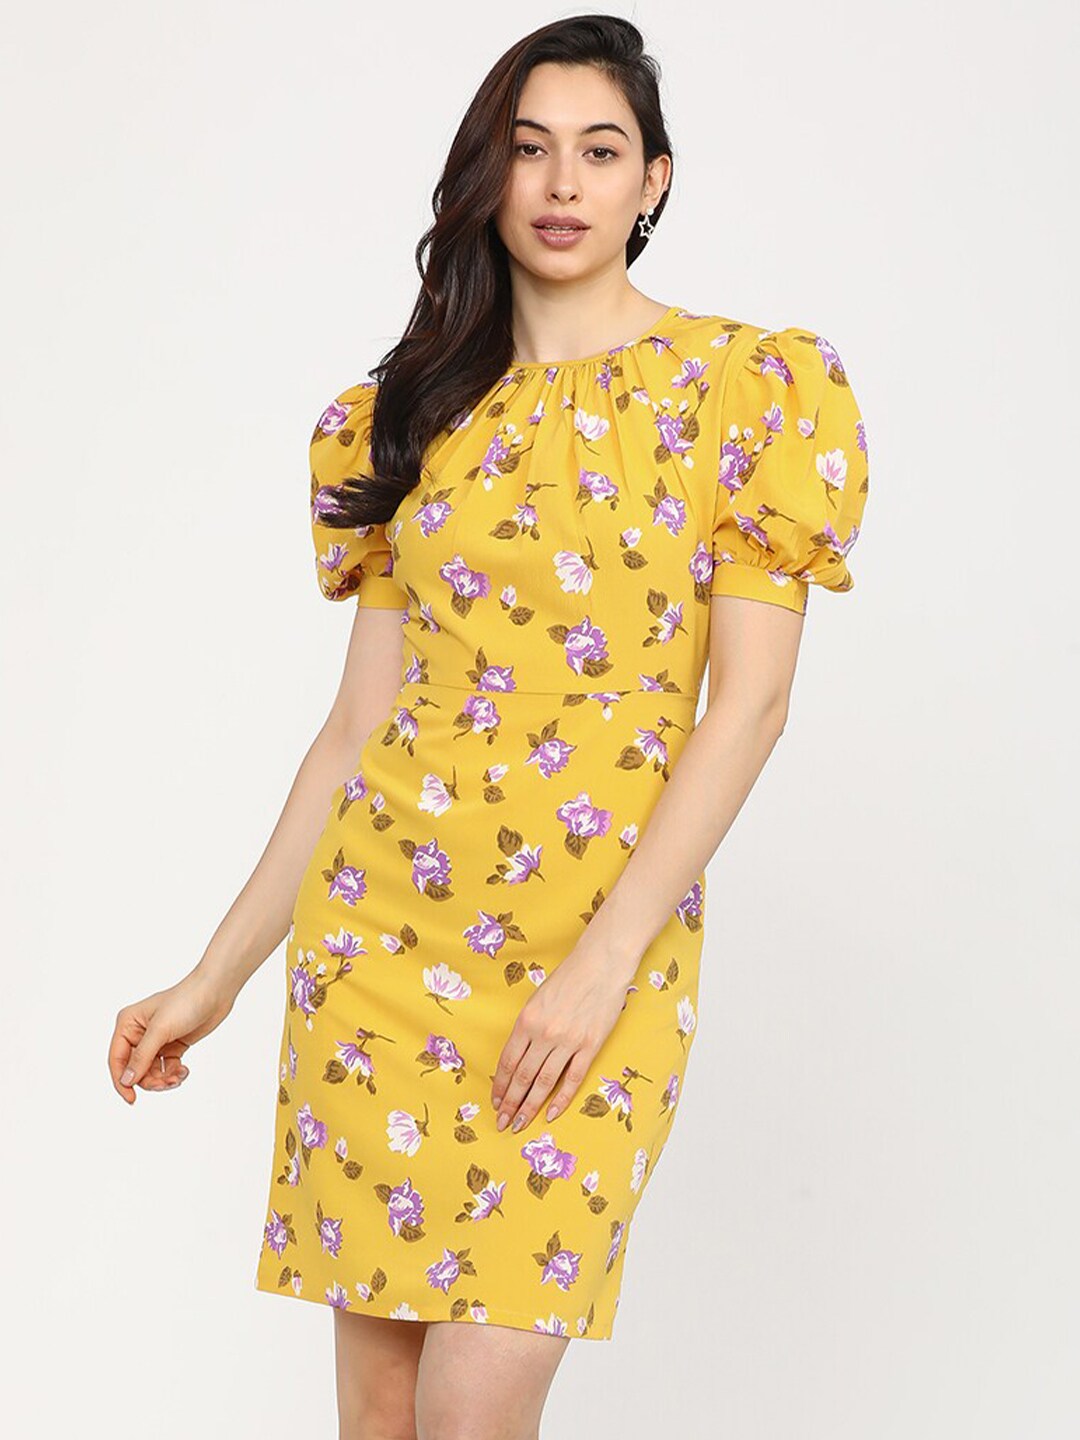 Tokyo Talkies Woman Yellow Floral Sheath Dress Price in India